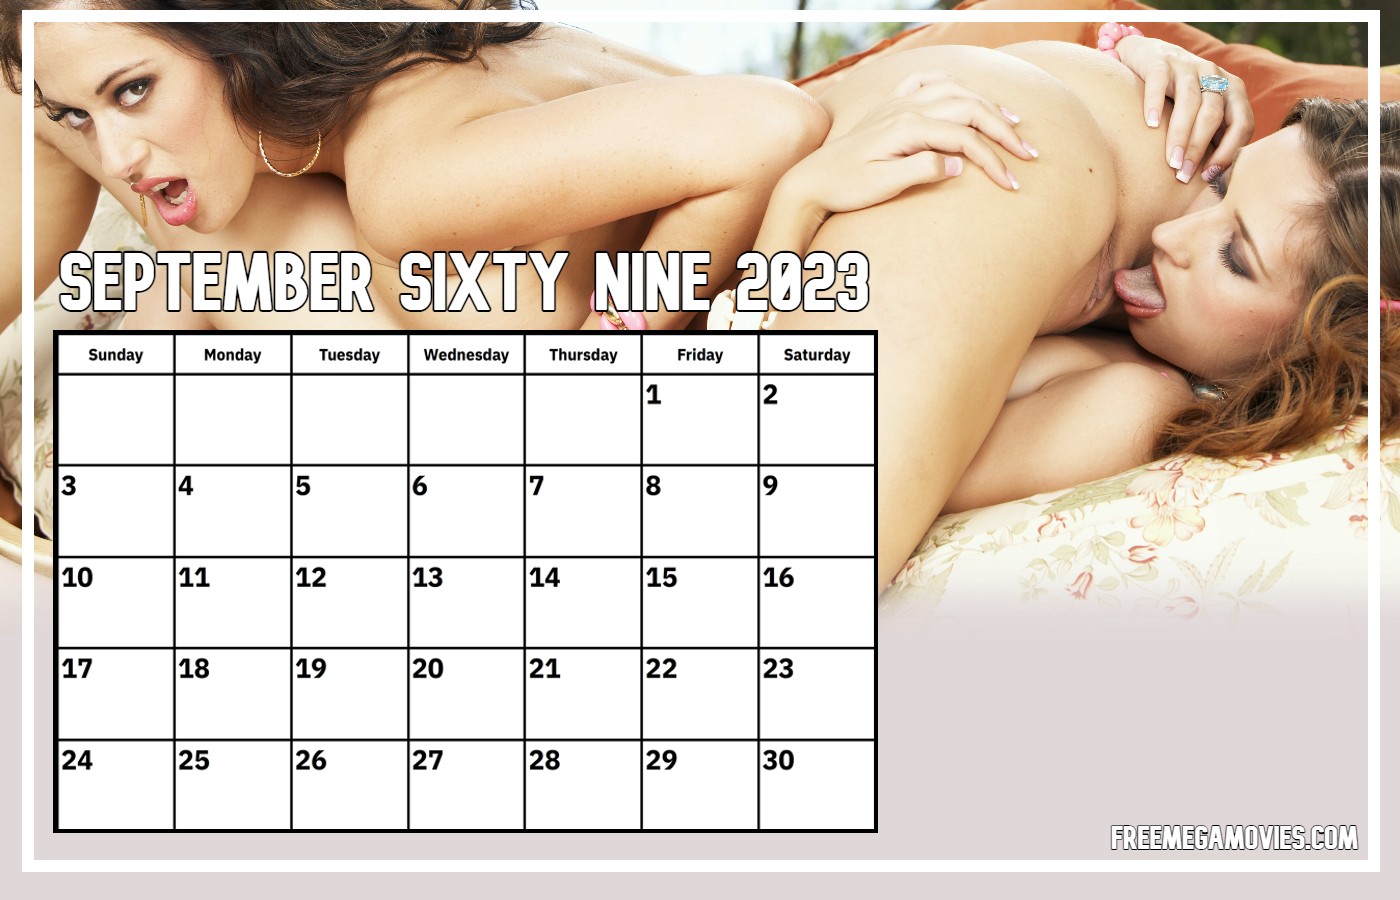 September Sixty-Nine 2023 Cassia Riley Shay Laren